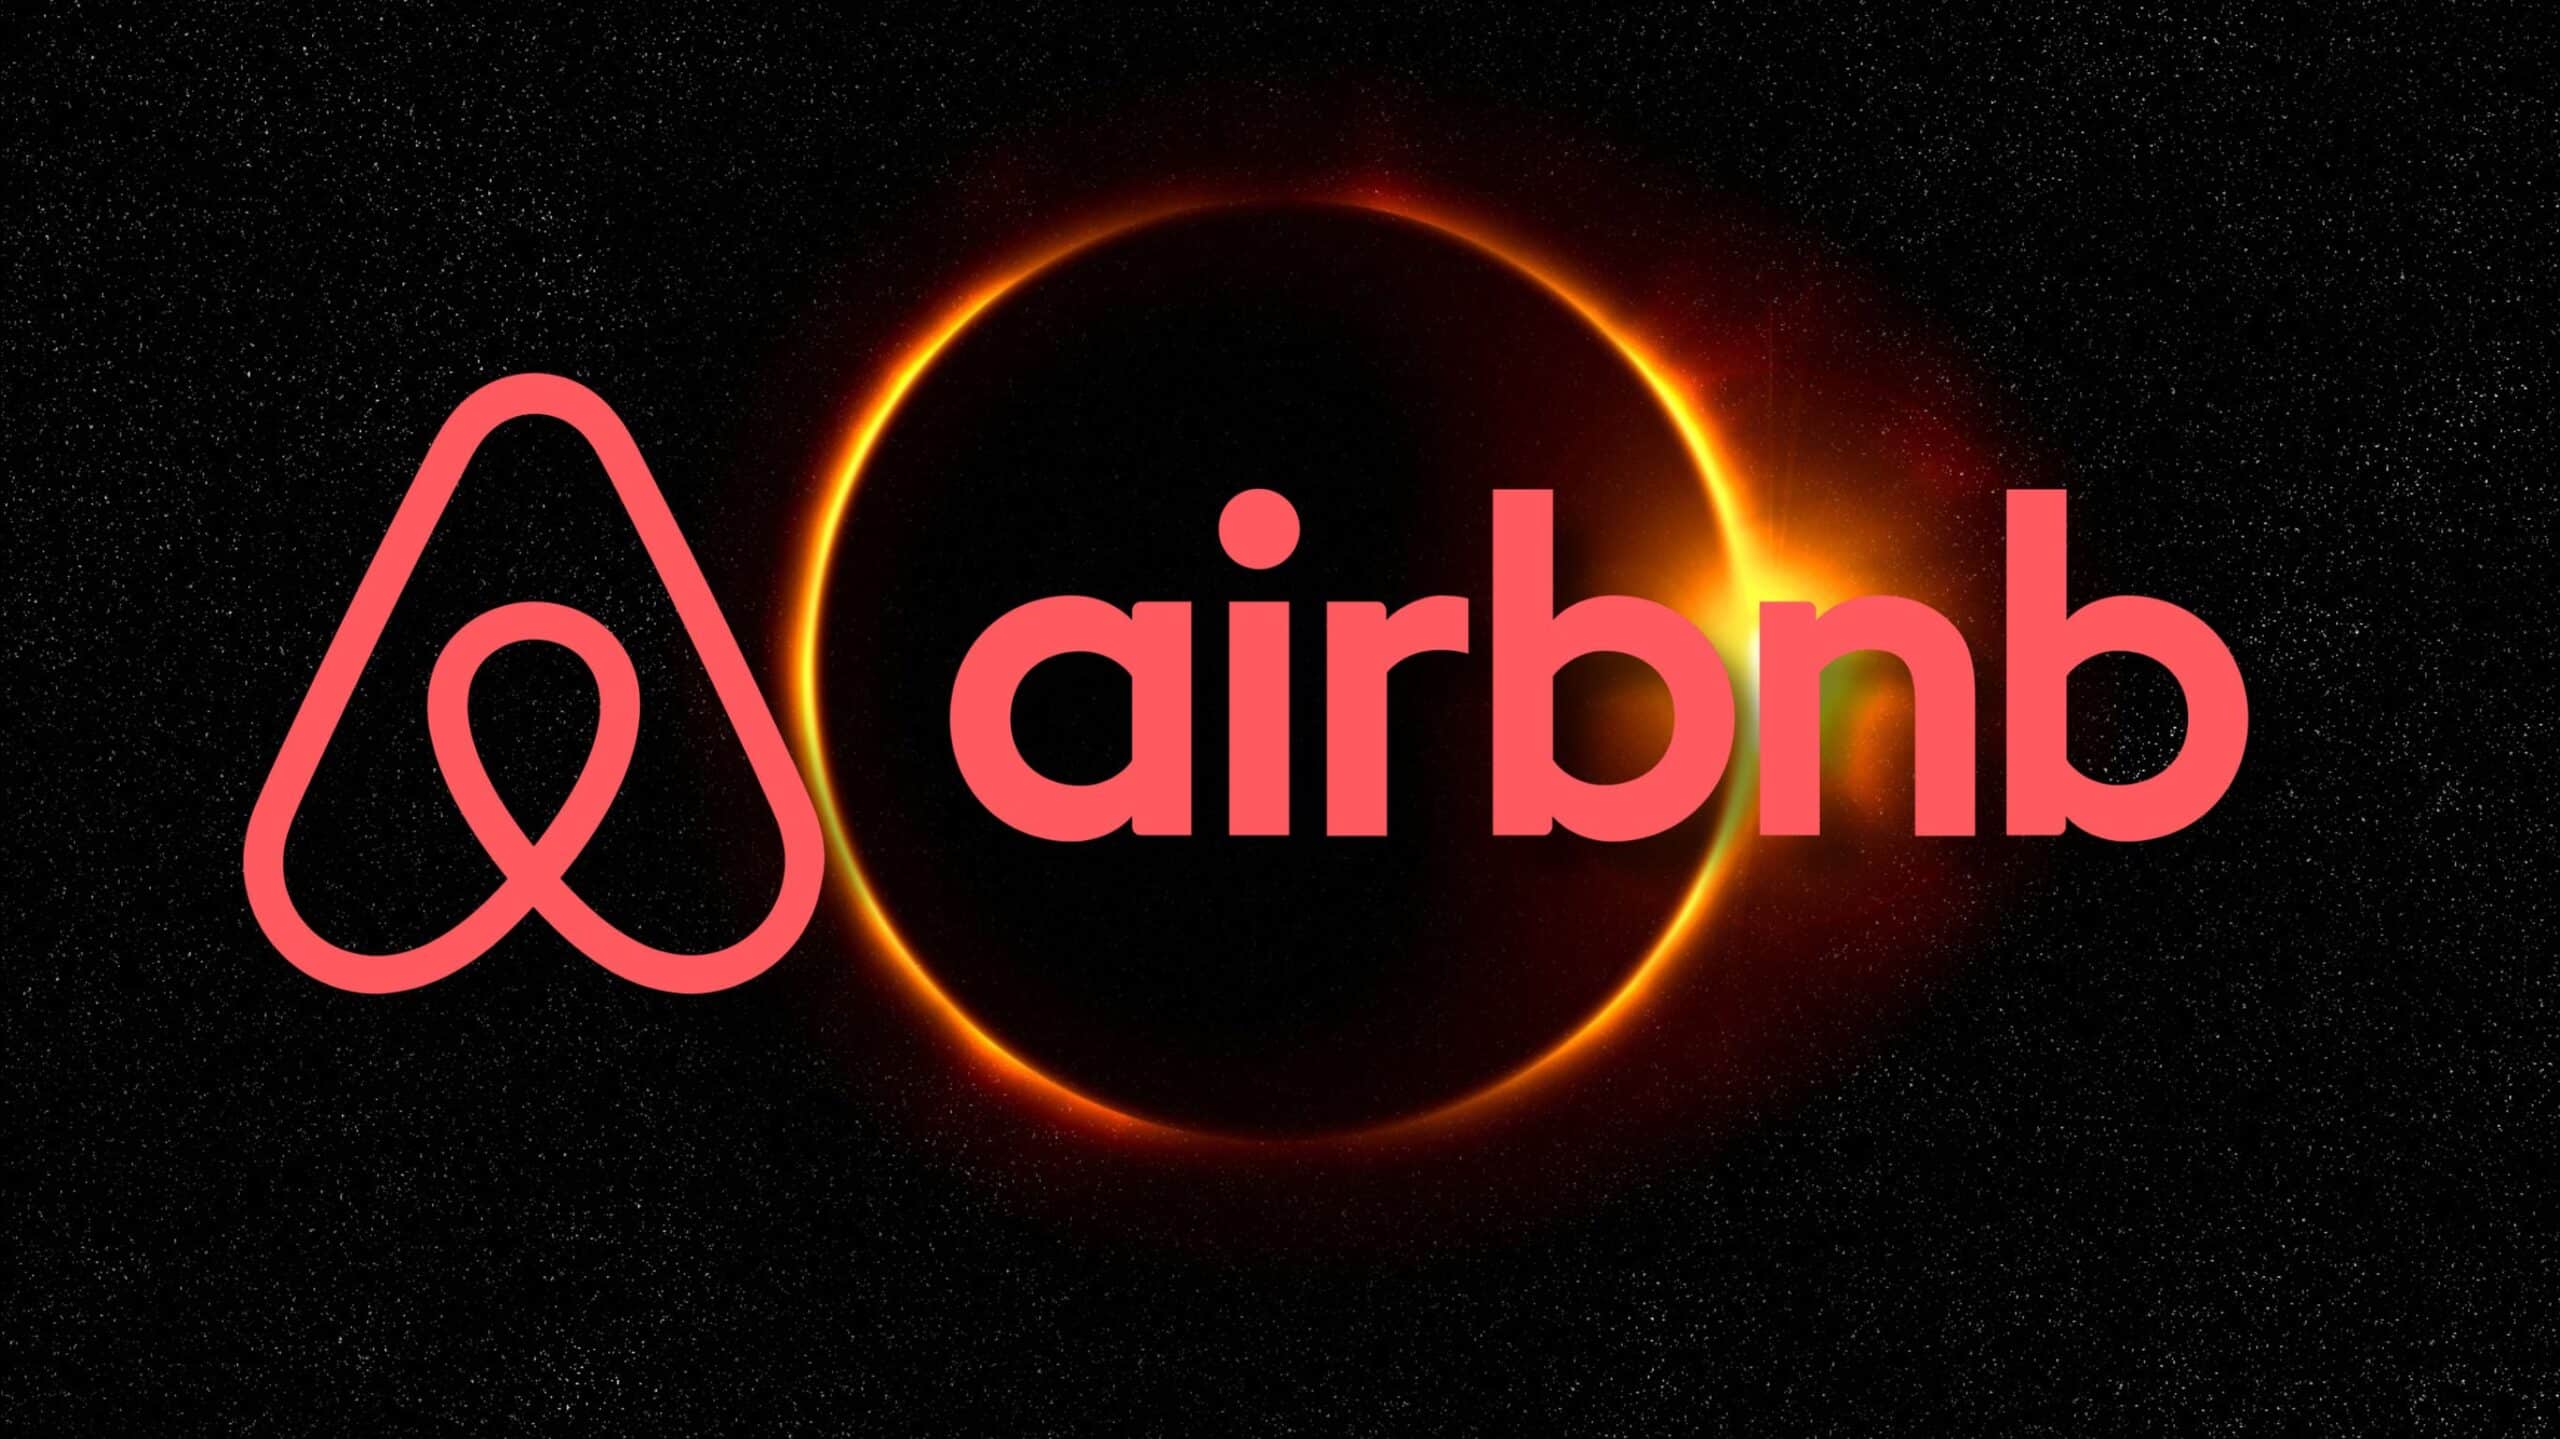 Eclipse solar 2024 Airbnb